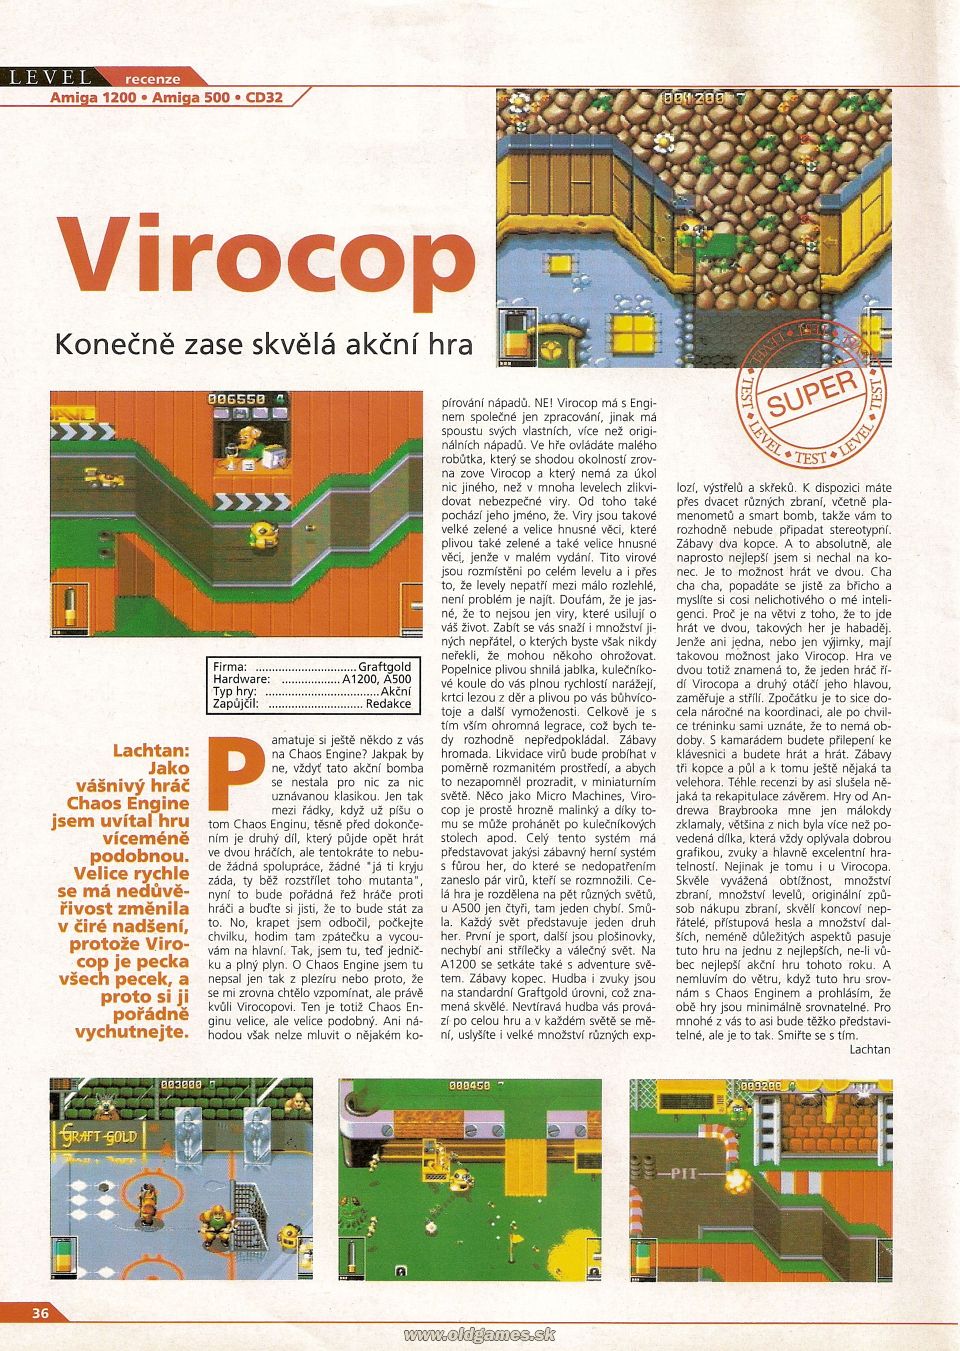 Virocop